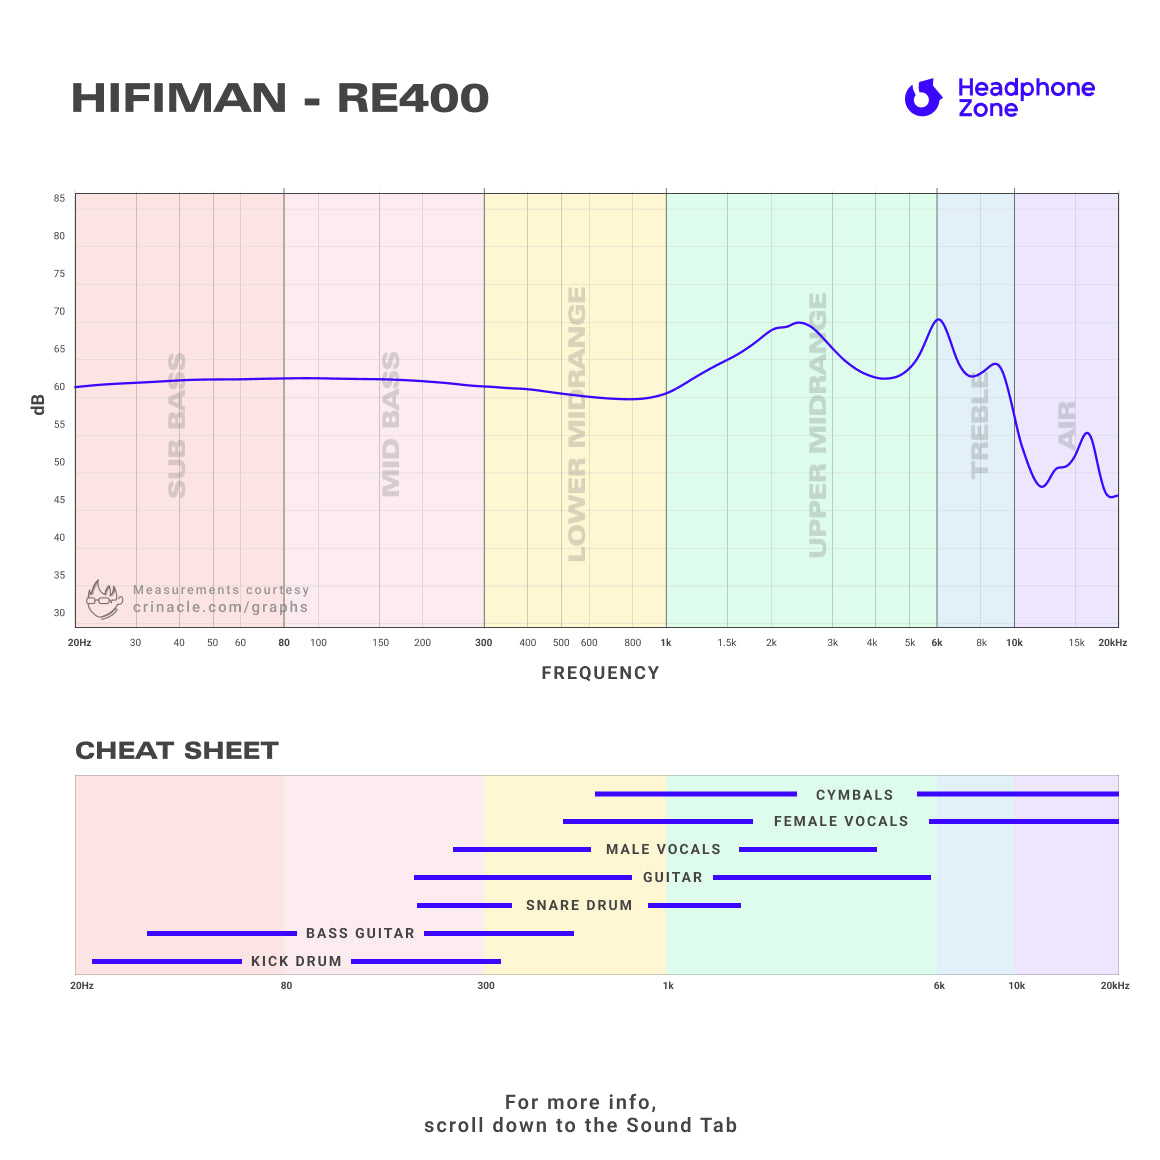 HiFiMAN - RE400